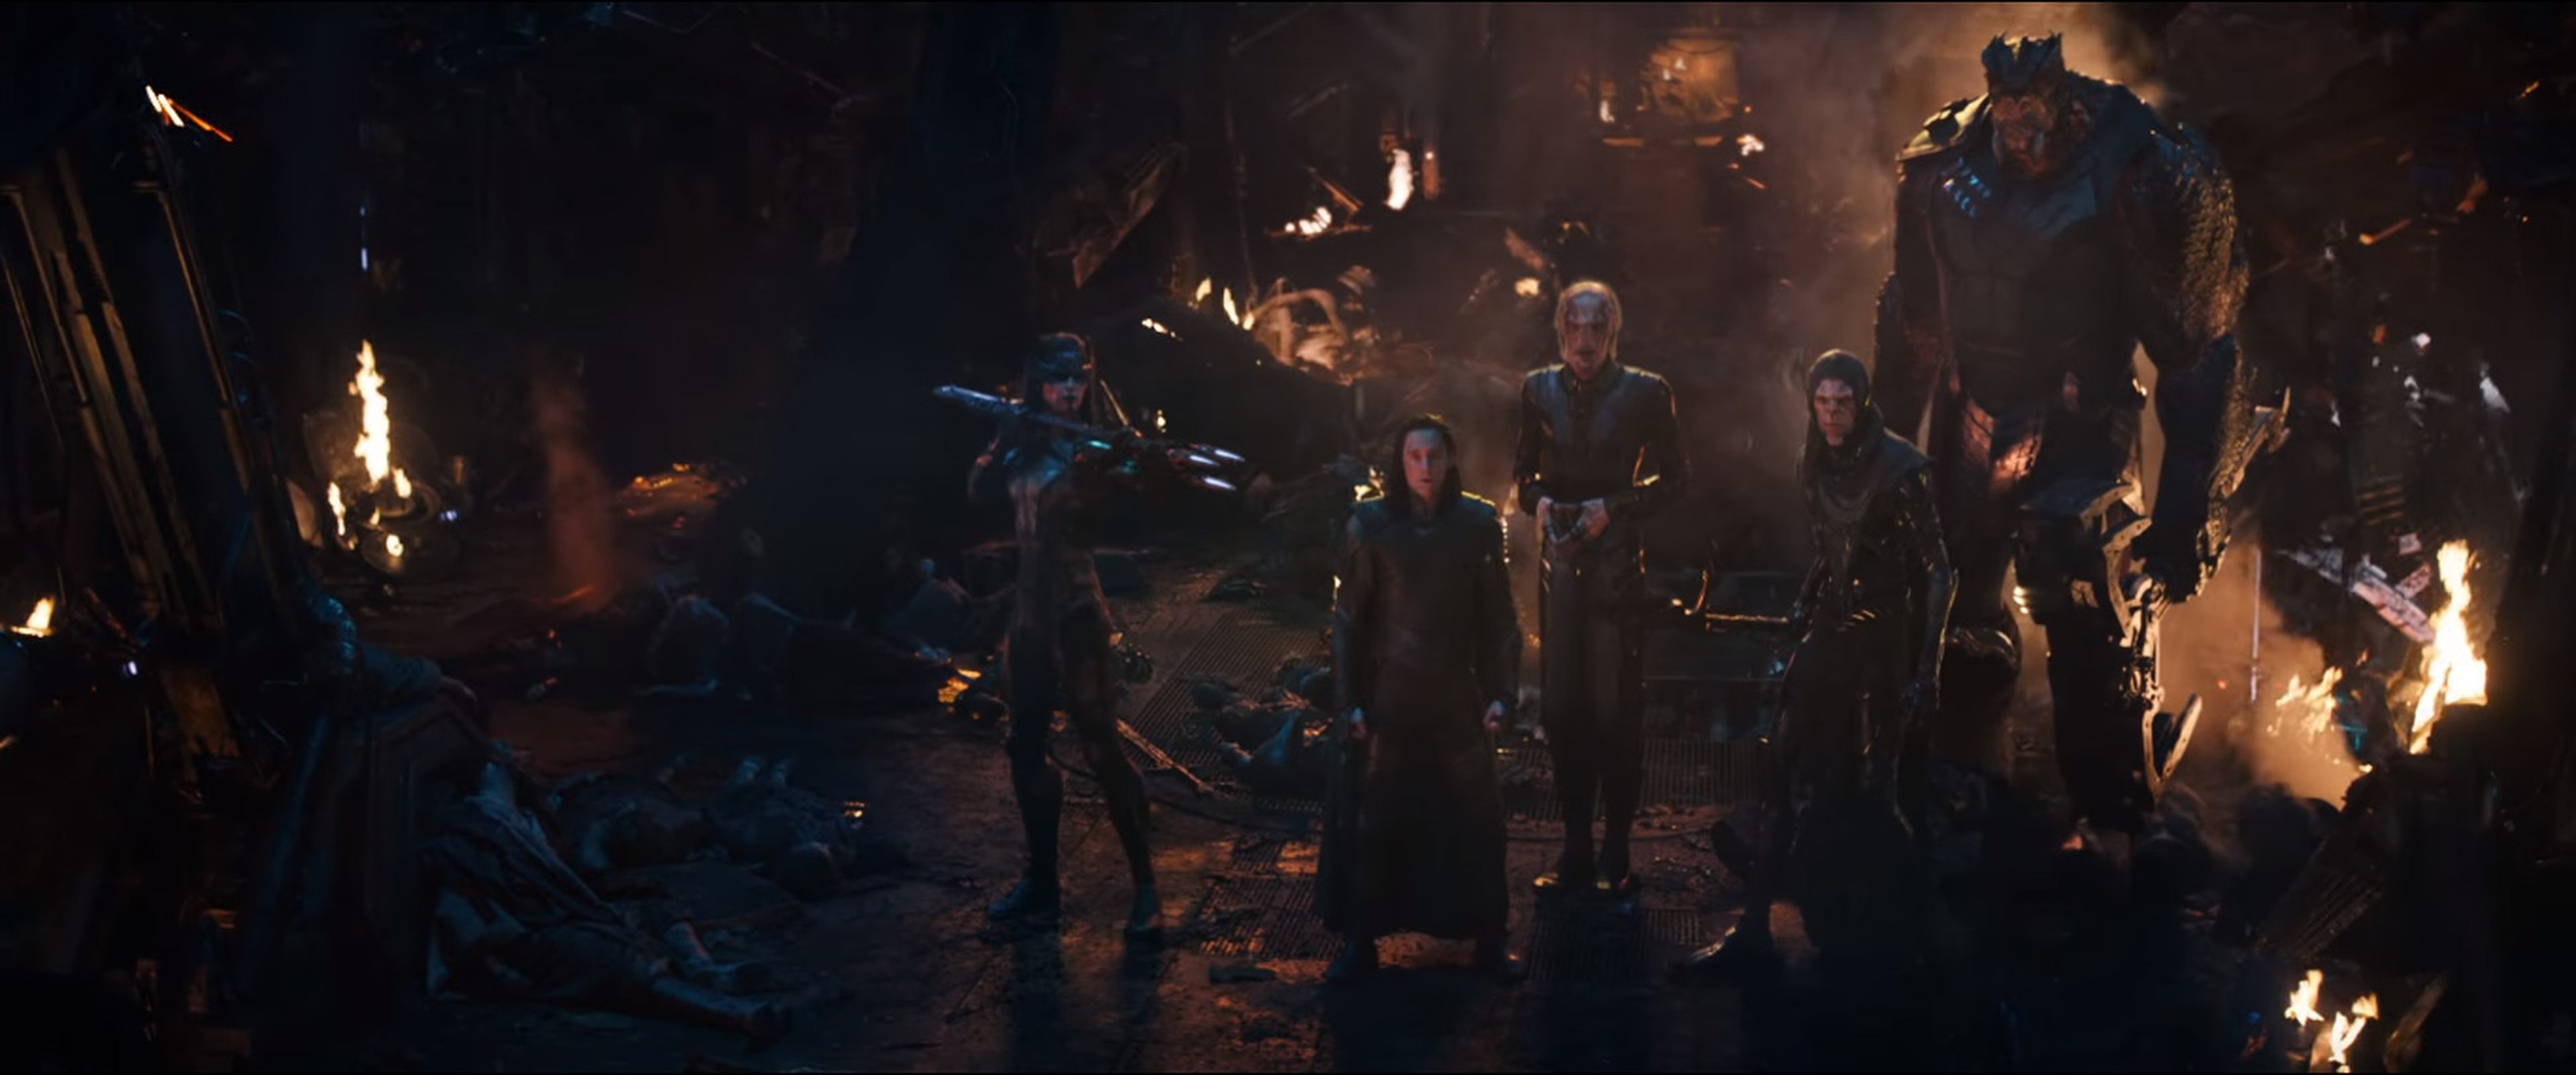 Loki con la Orden negra de Thanos en Vengadores: Infinity War